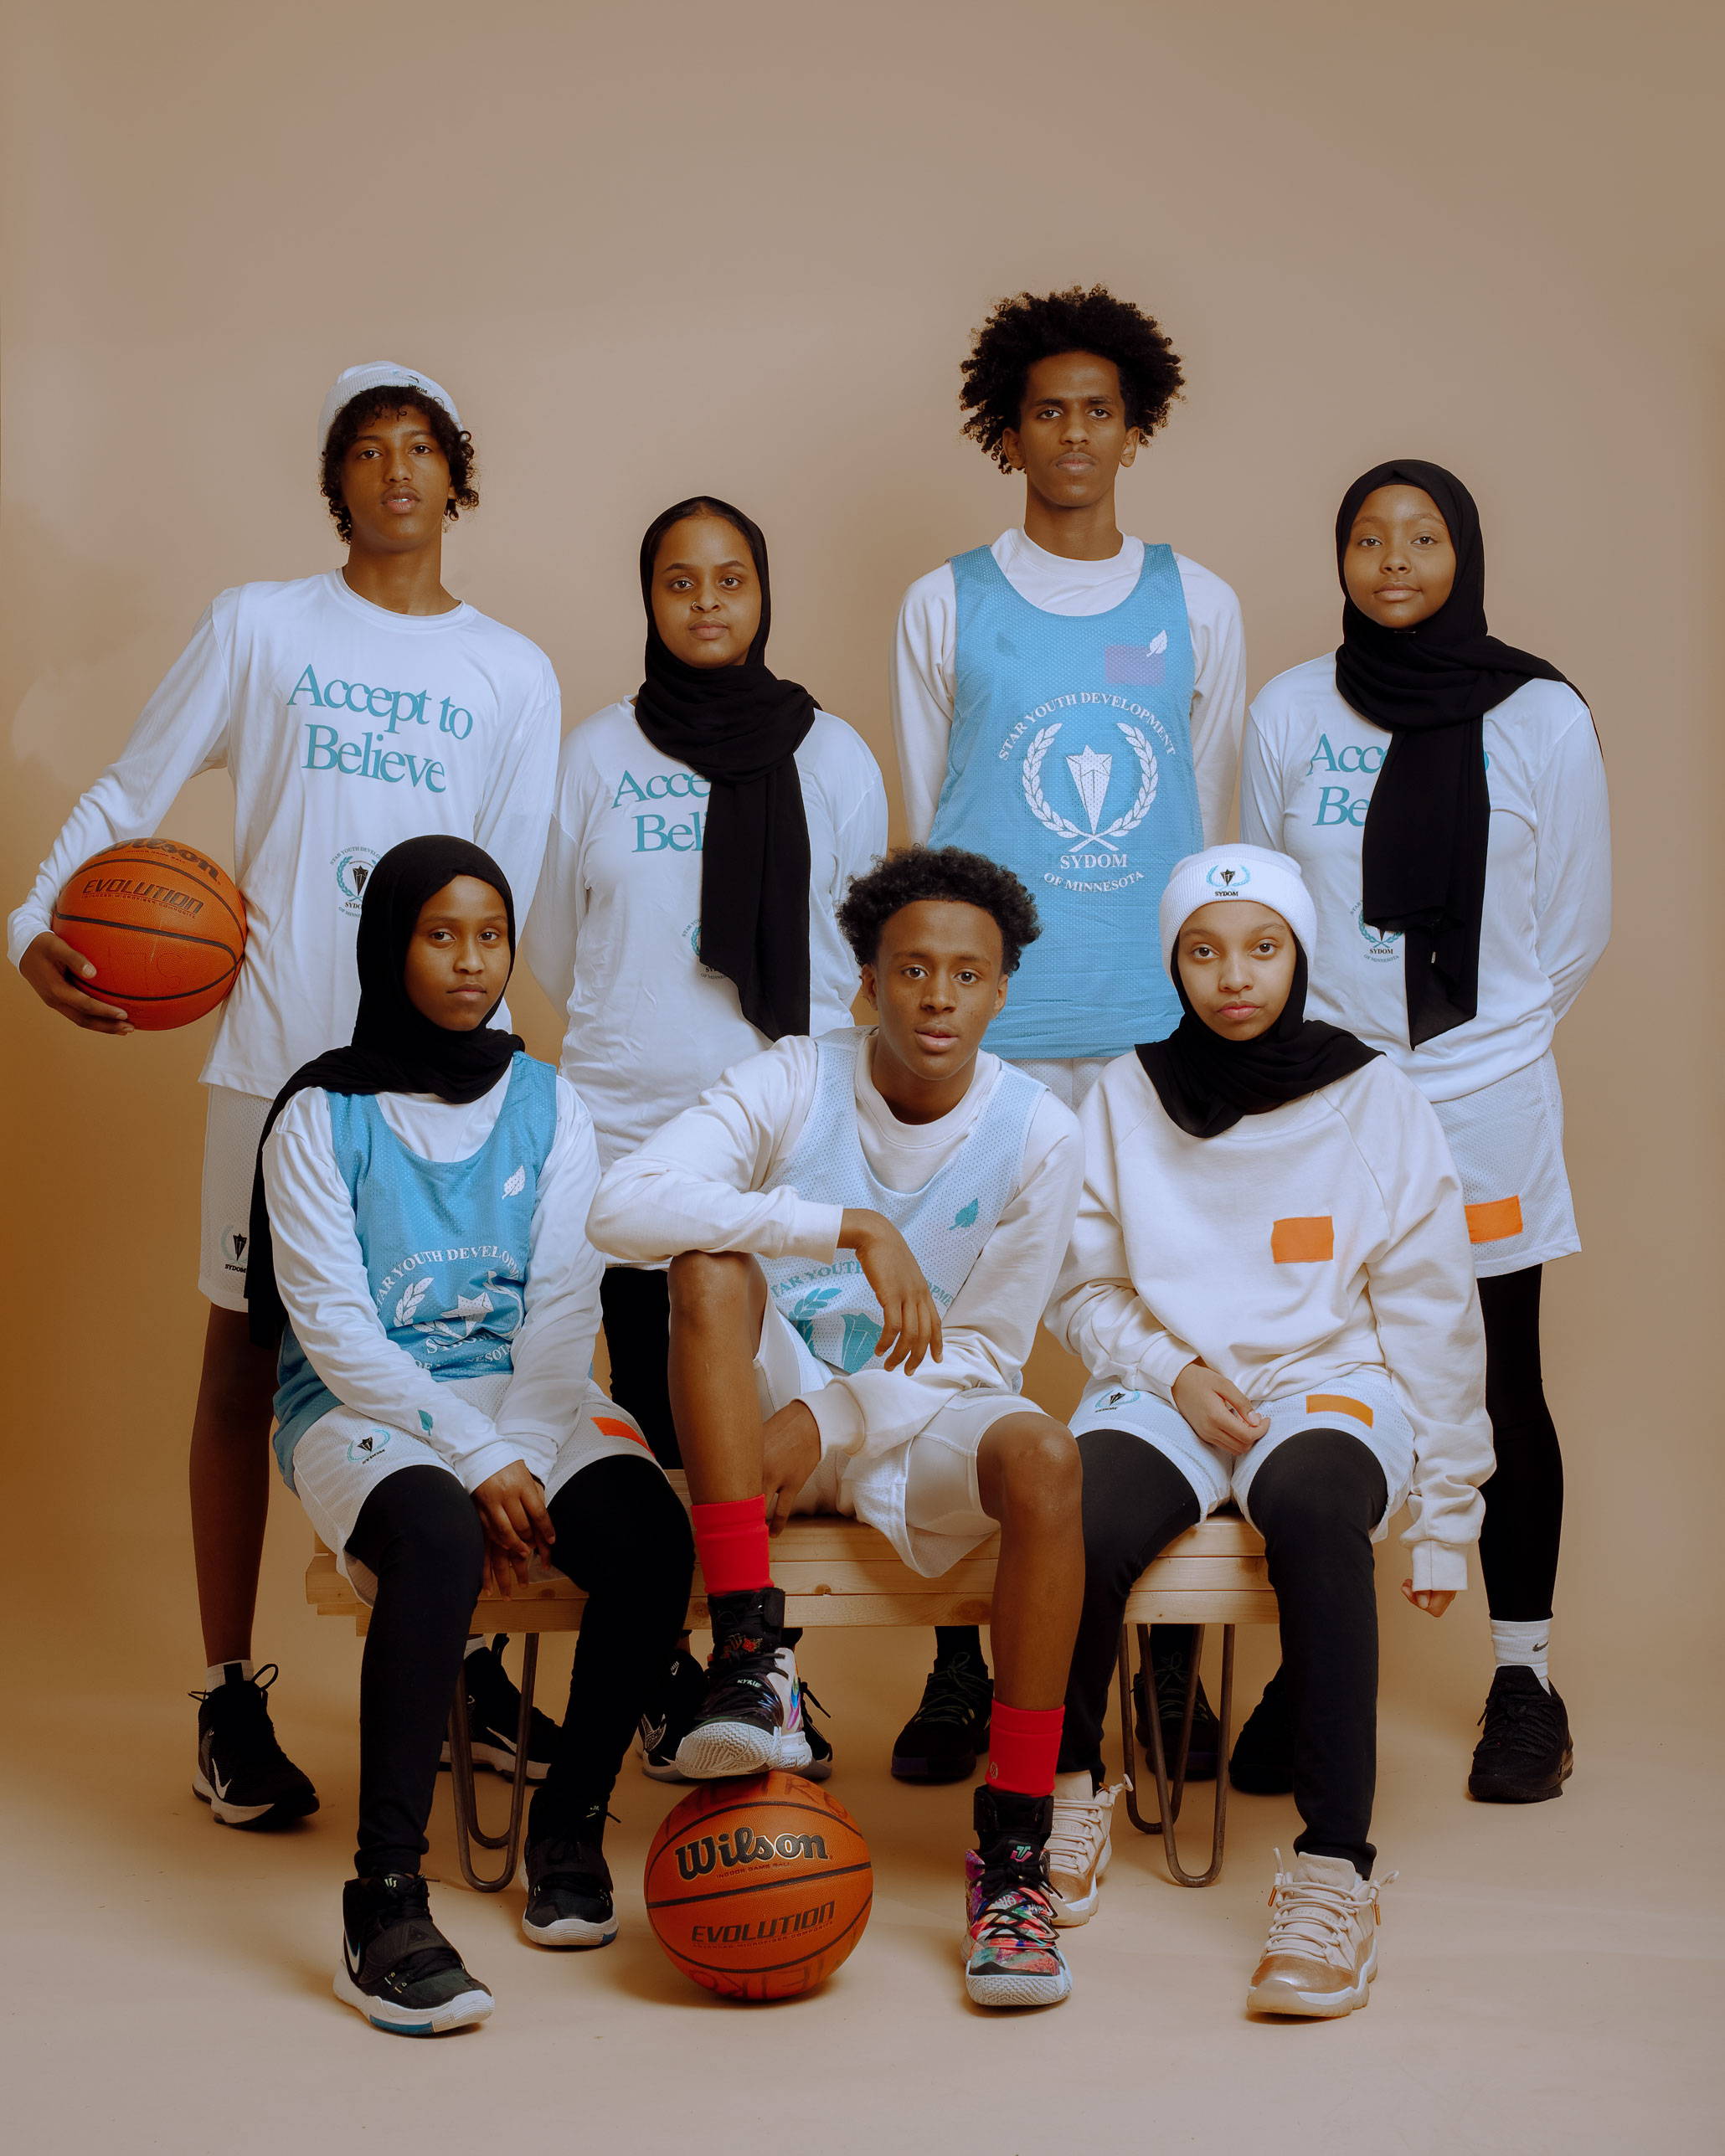 Somalia Youth Development Organizations Basketball Team and Epimonia Recycled Refugee Life Jackets Apparel and Gear Orange